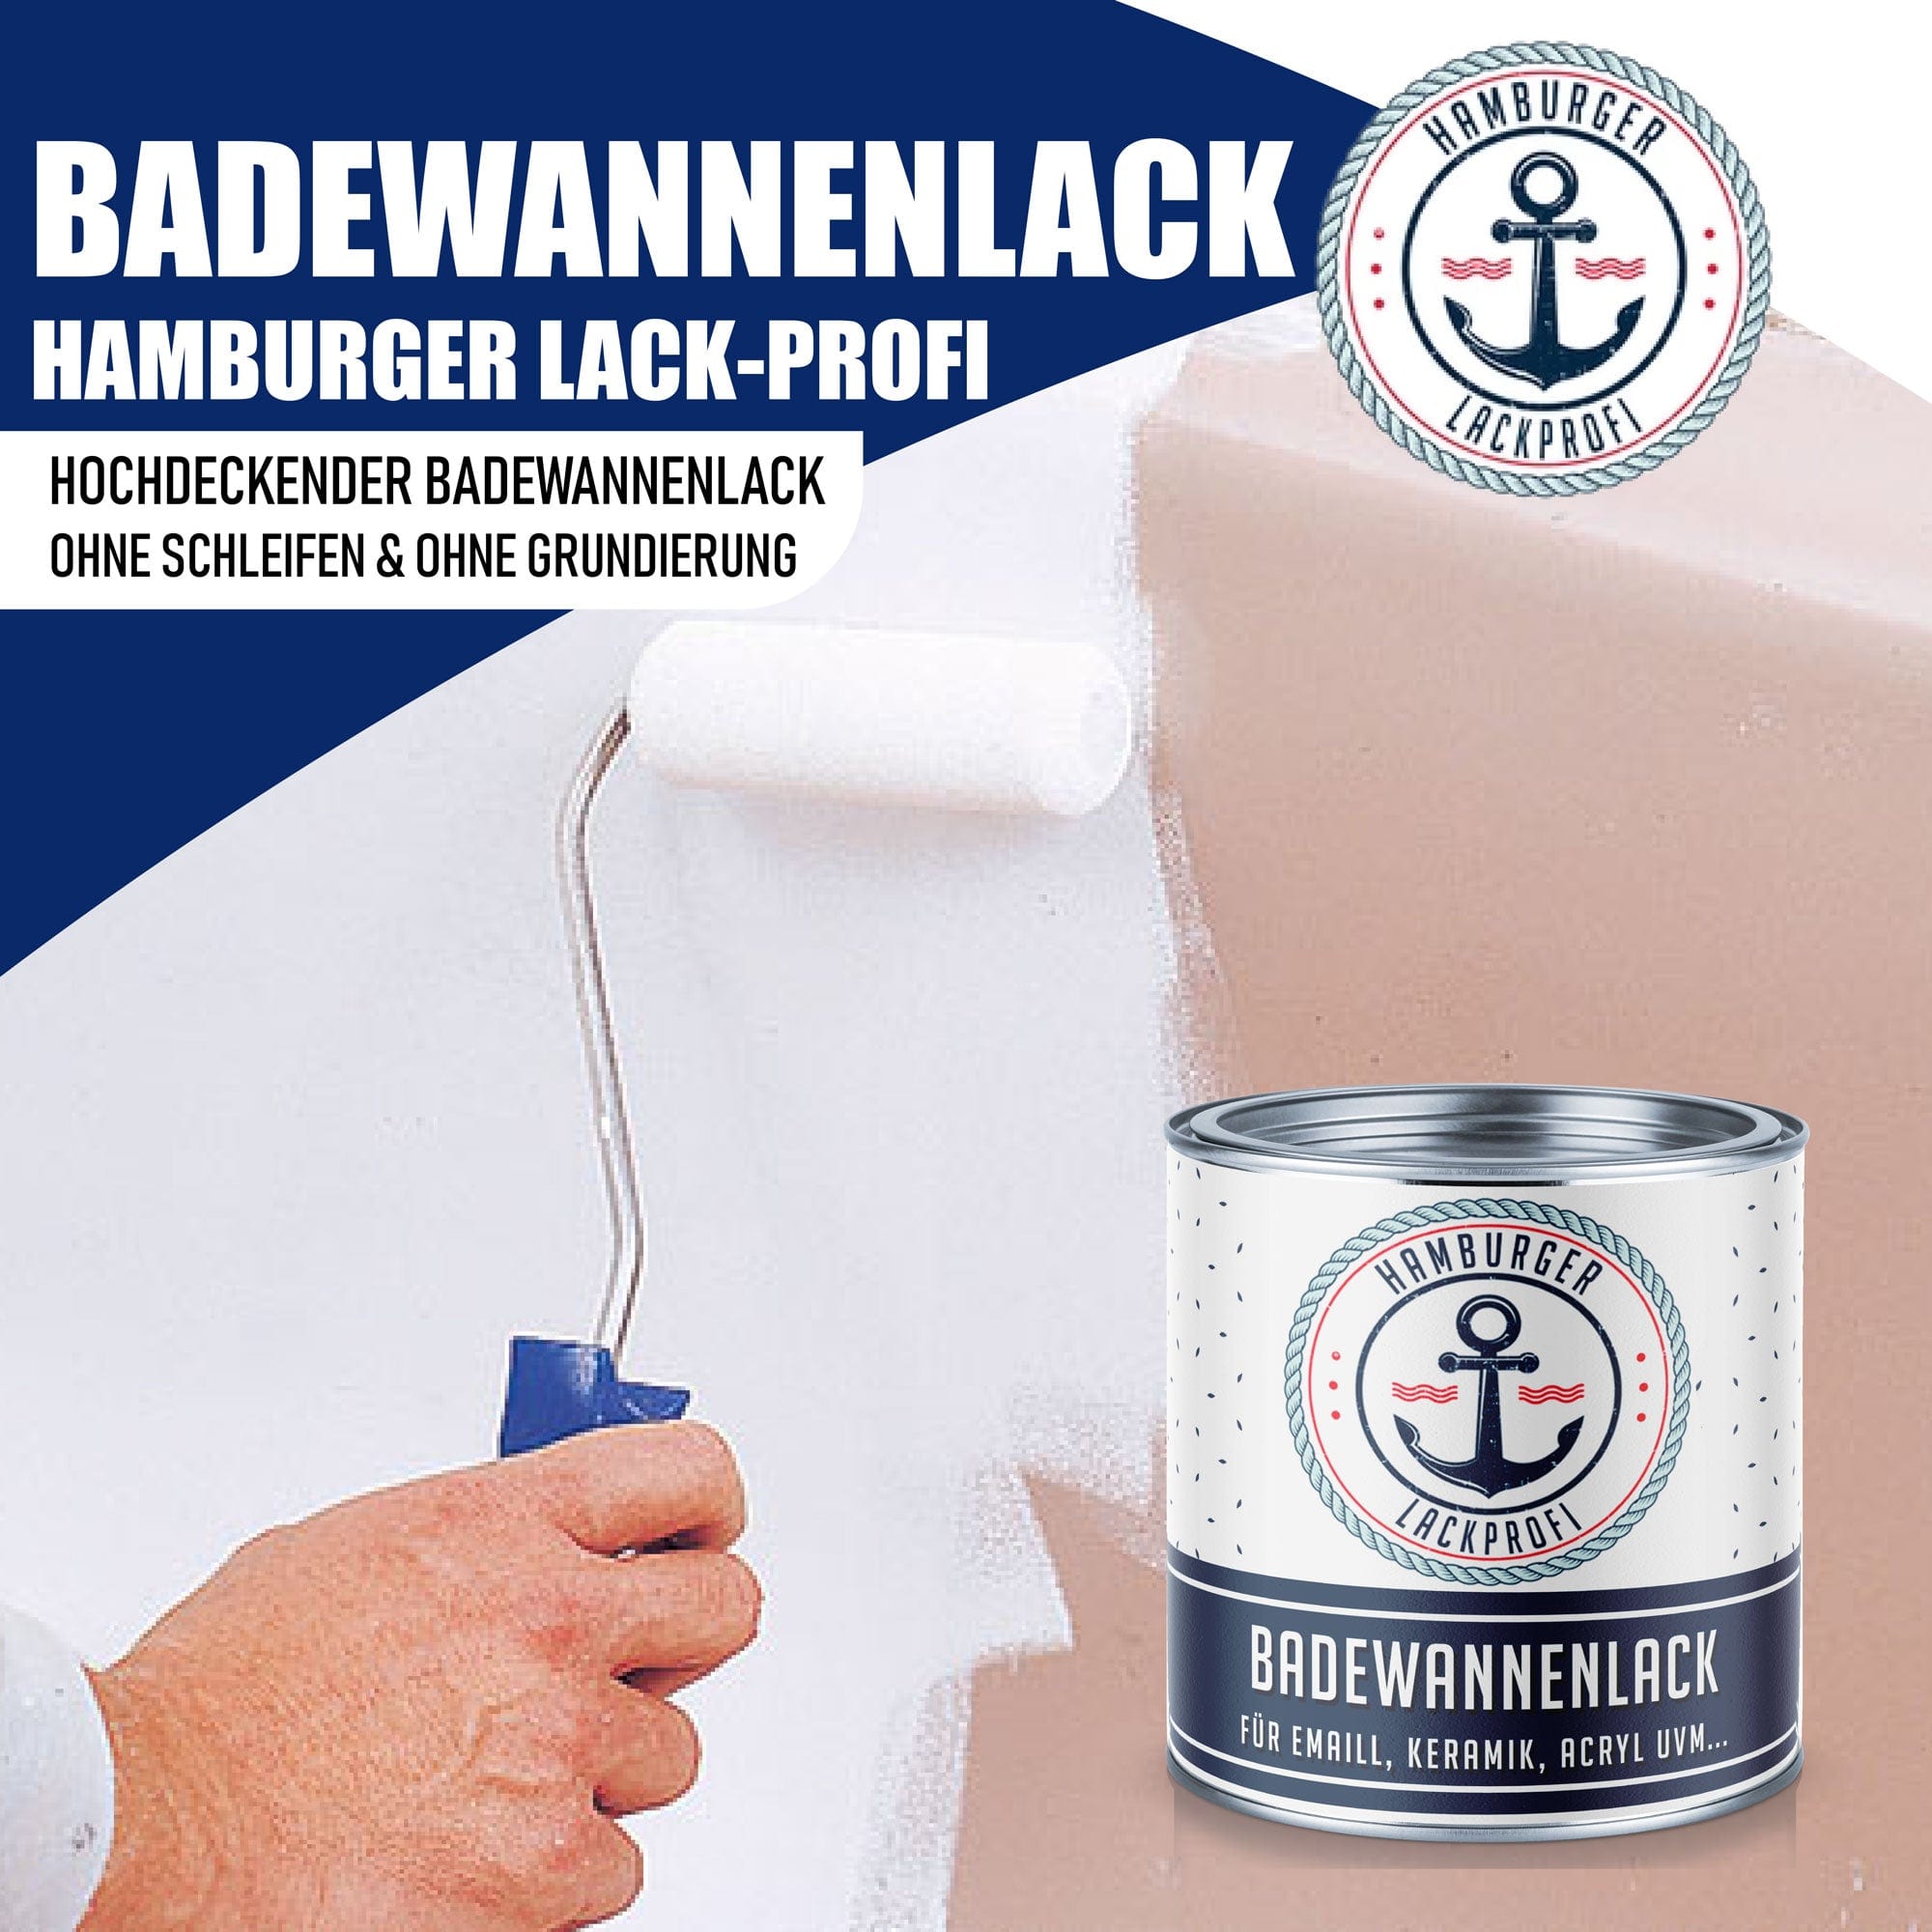 Hamburger Lack-Profi Badewannenlack Hamburger Lack-Profi 2K Badewannenlack Kobaltblau RAL 5013 - Glänzend / Seidenmatt / Matt